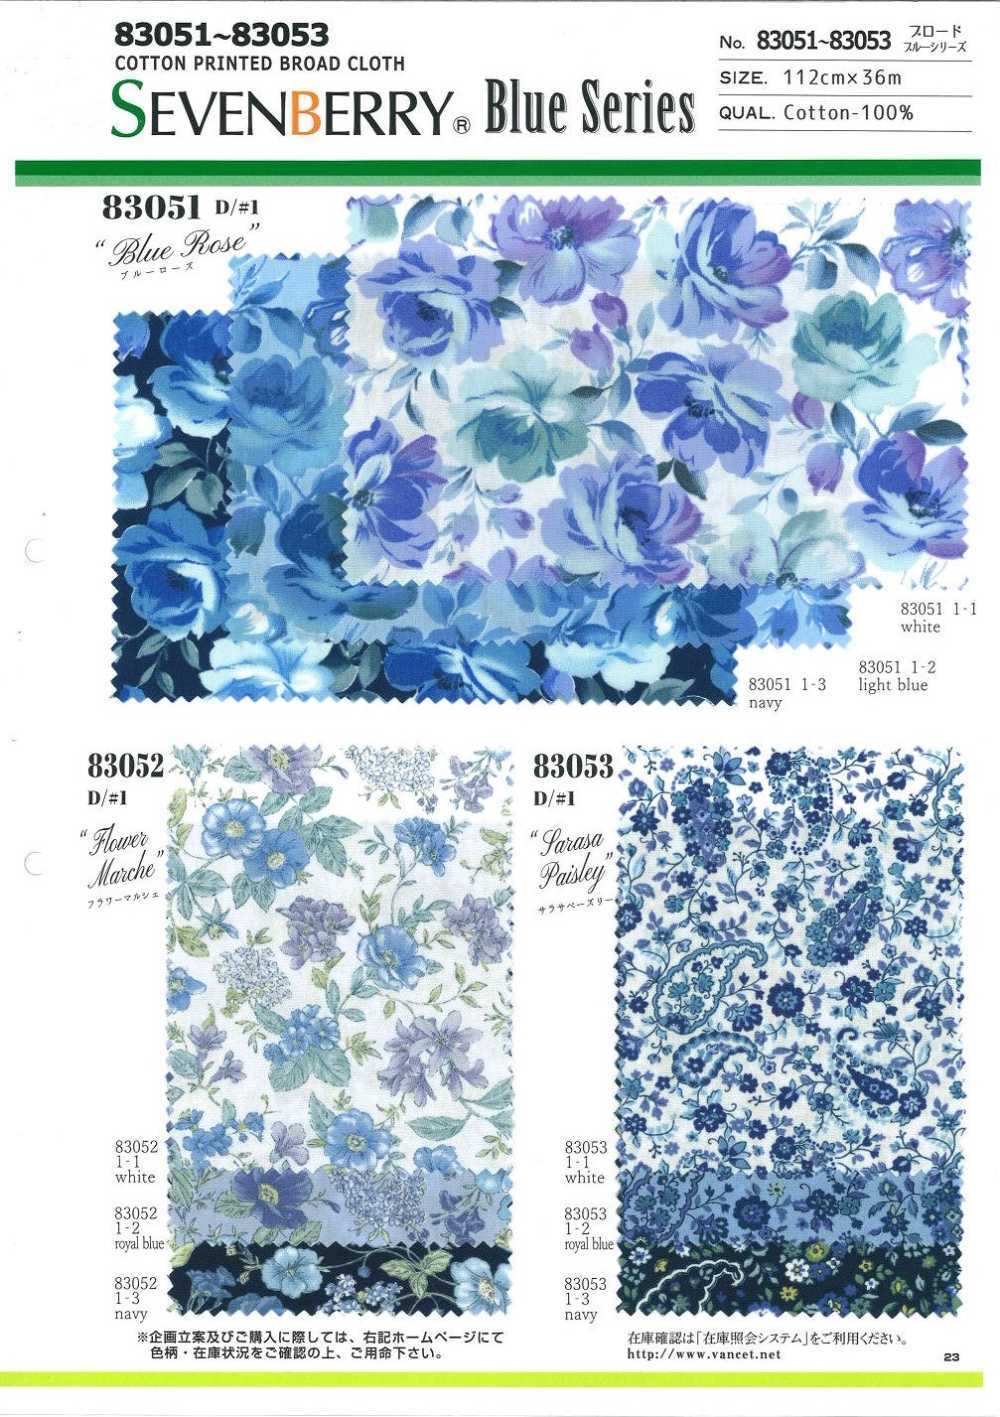 83051 Breittuch Blue Series Blue Rose[Textilgewebe] VANCET